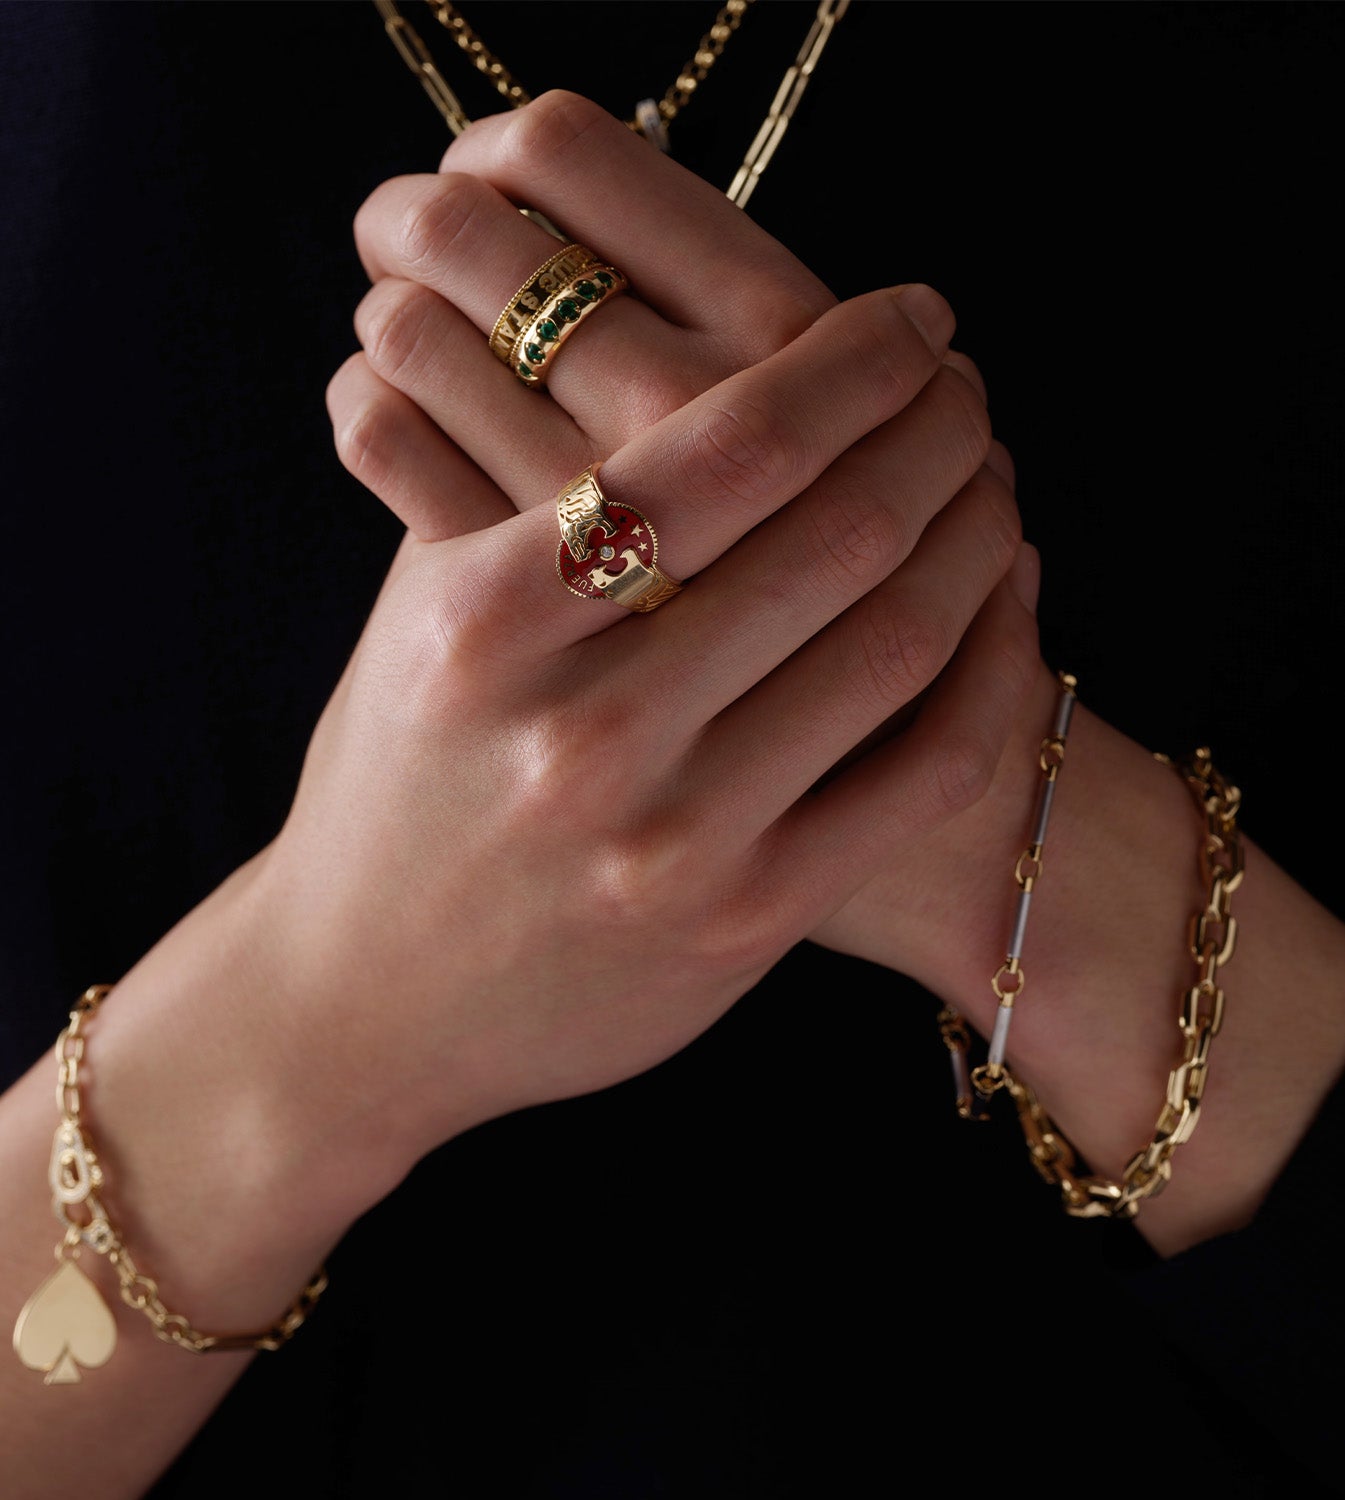 Mixed Gold Element Chain Bracelet